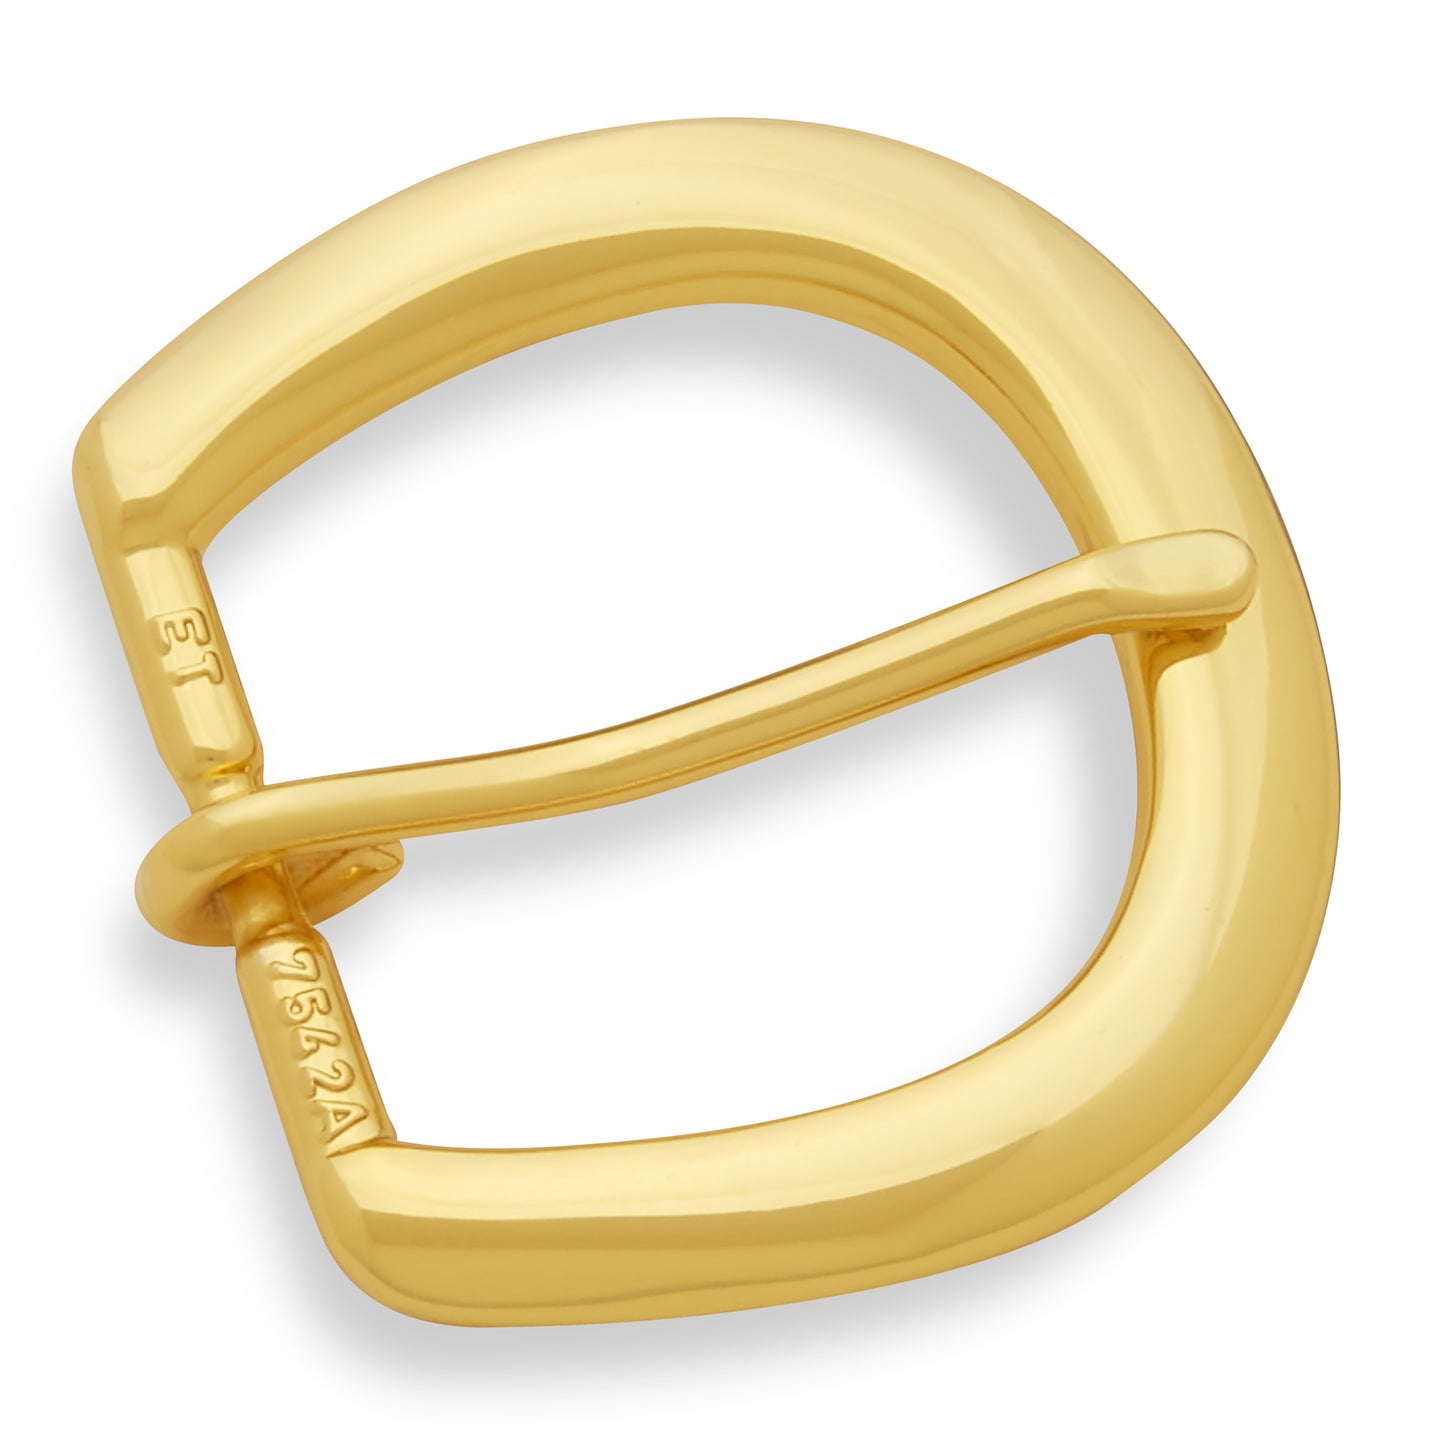 1" Ranger Belt Buckle - Gold